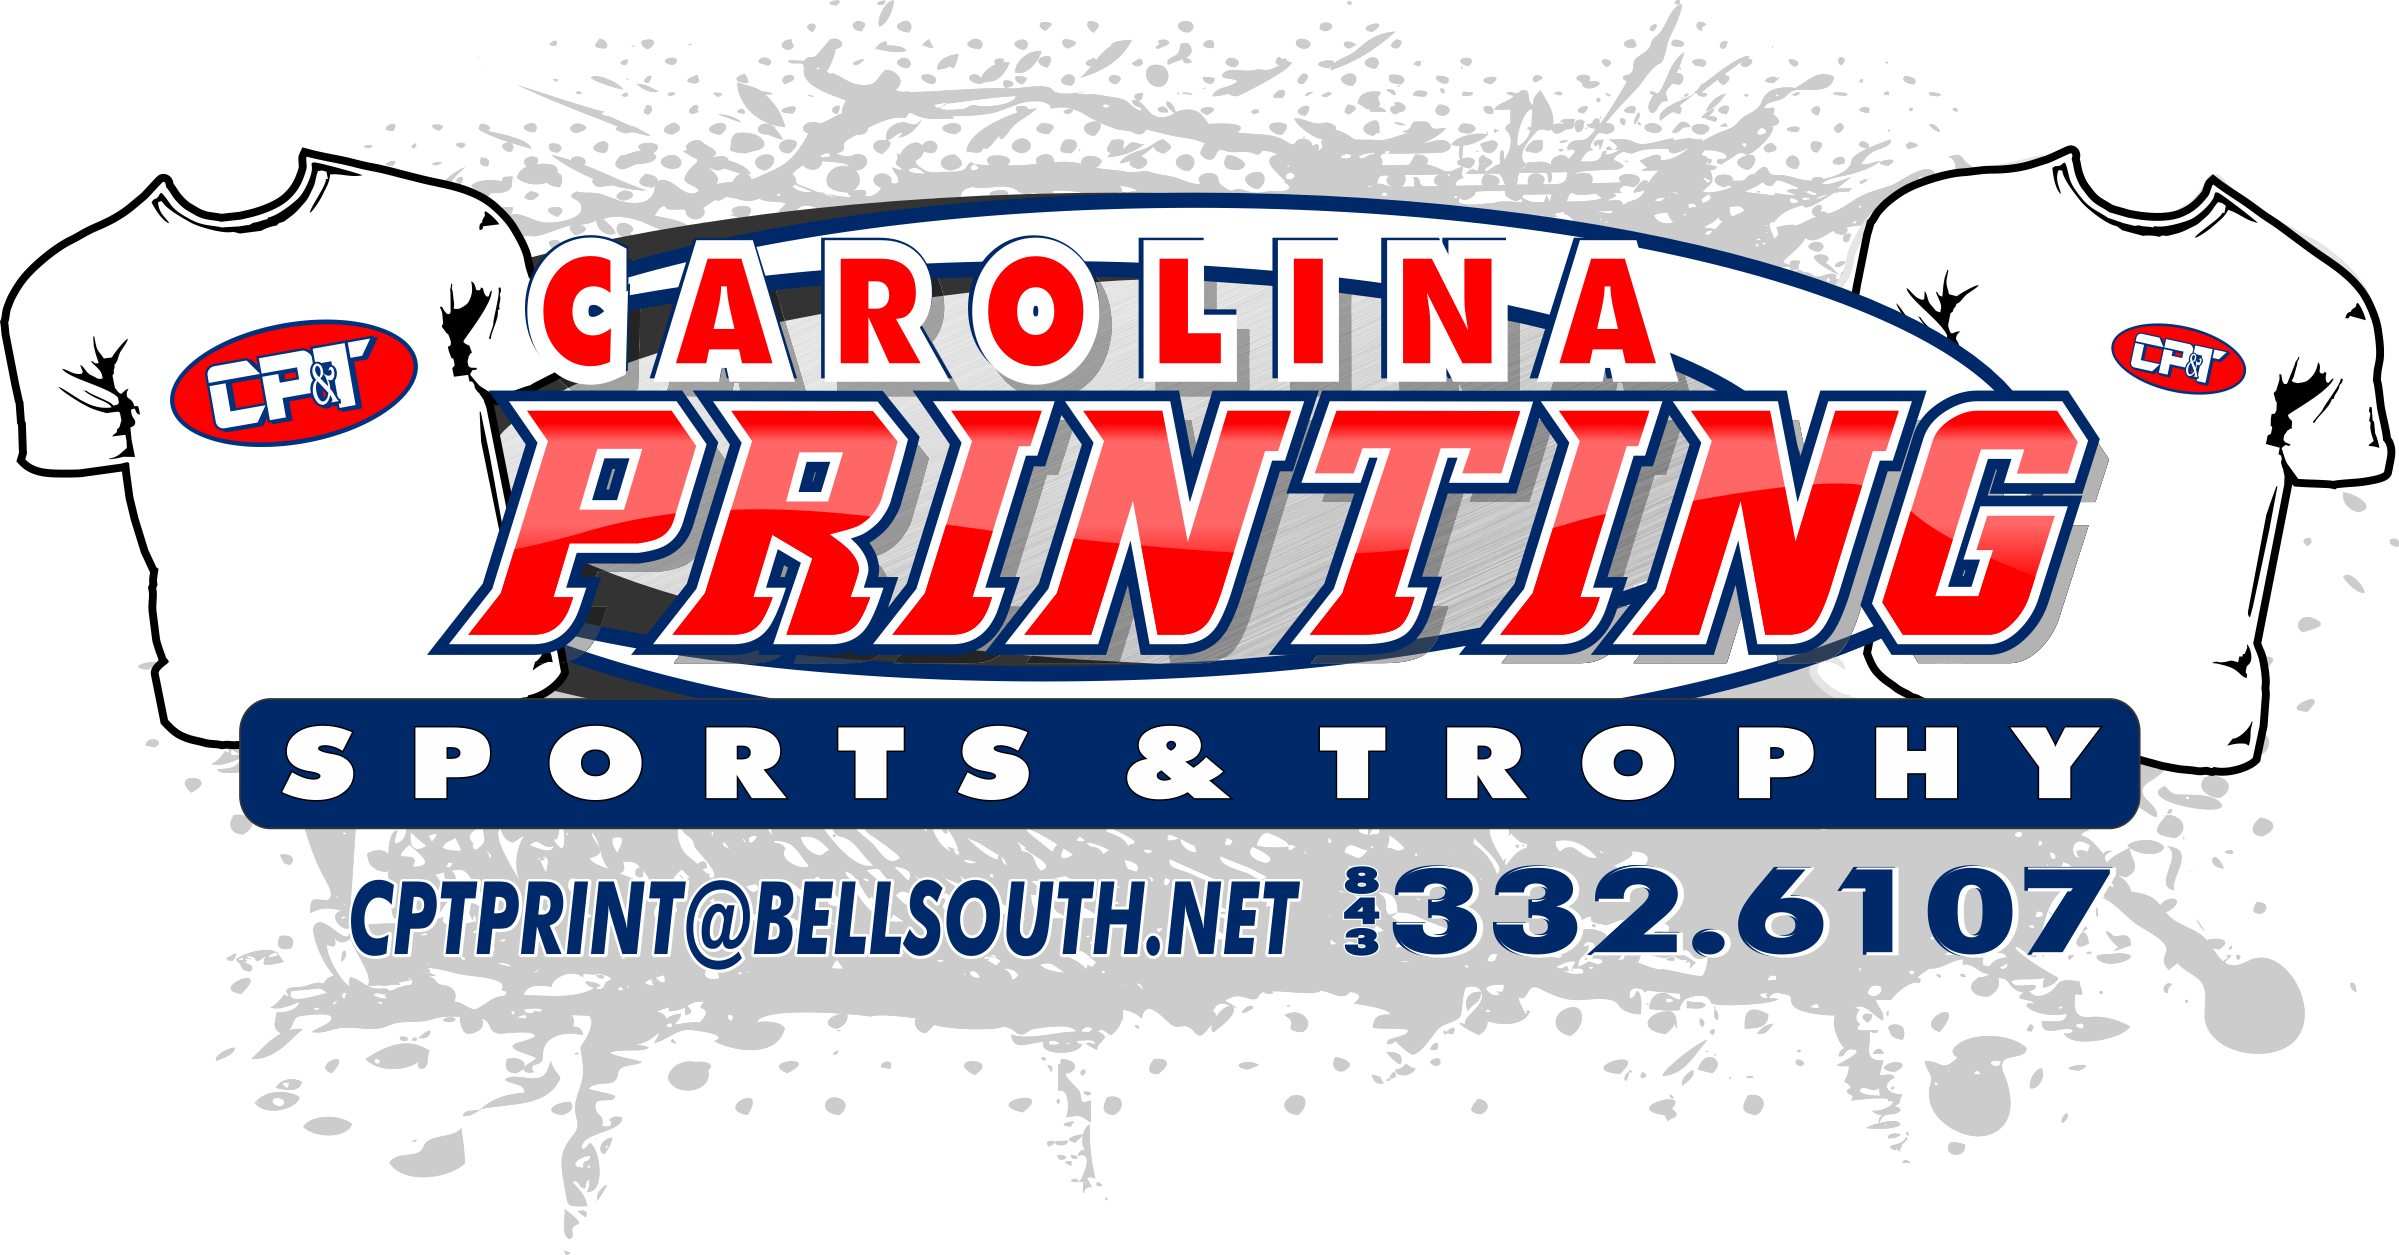 Carolina Printing Sports & Trophy